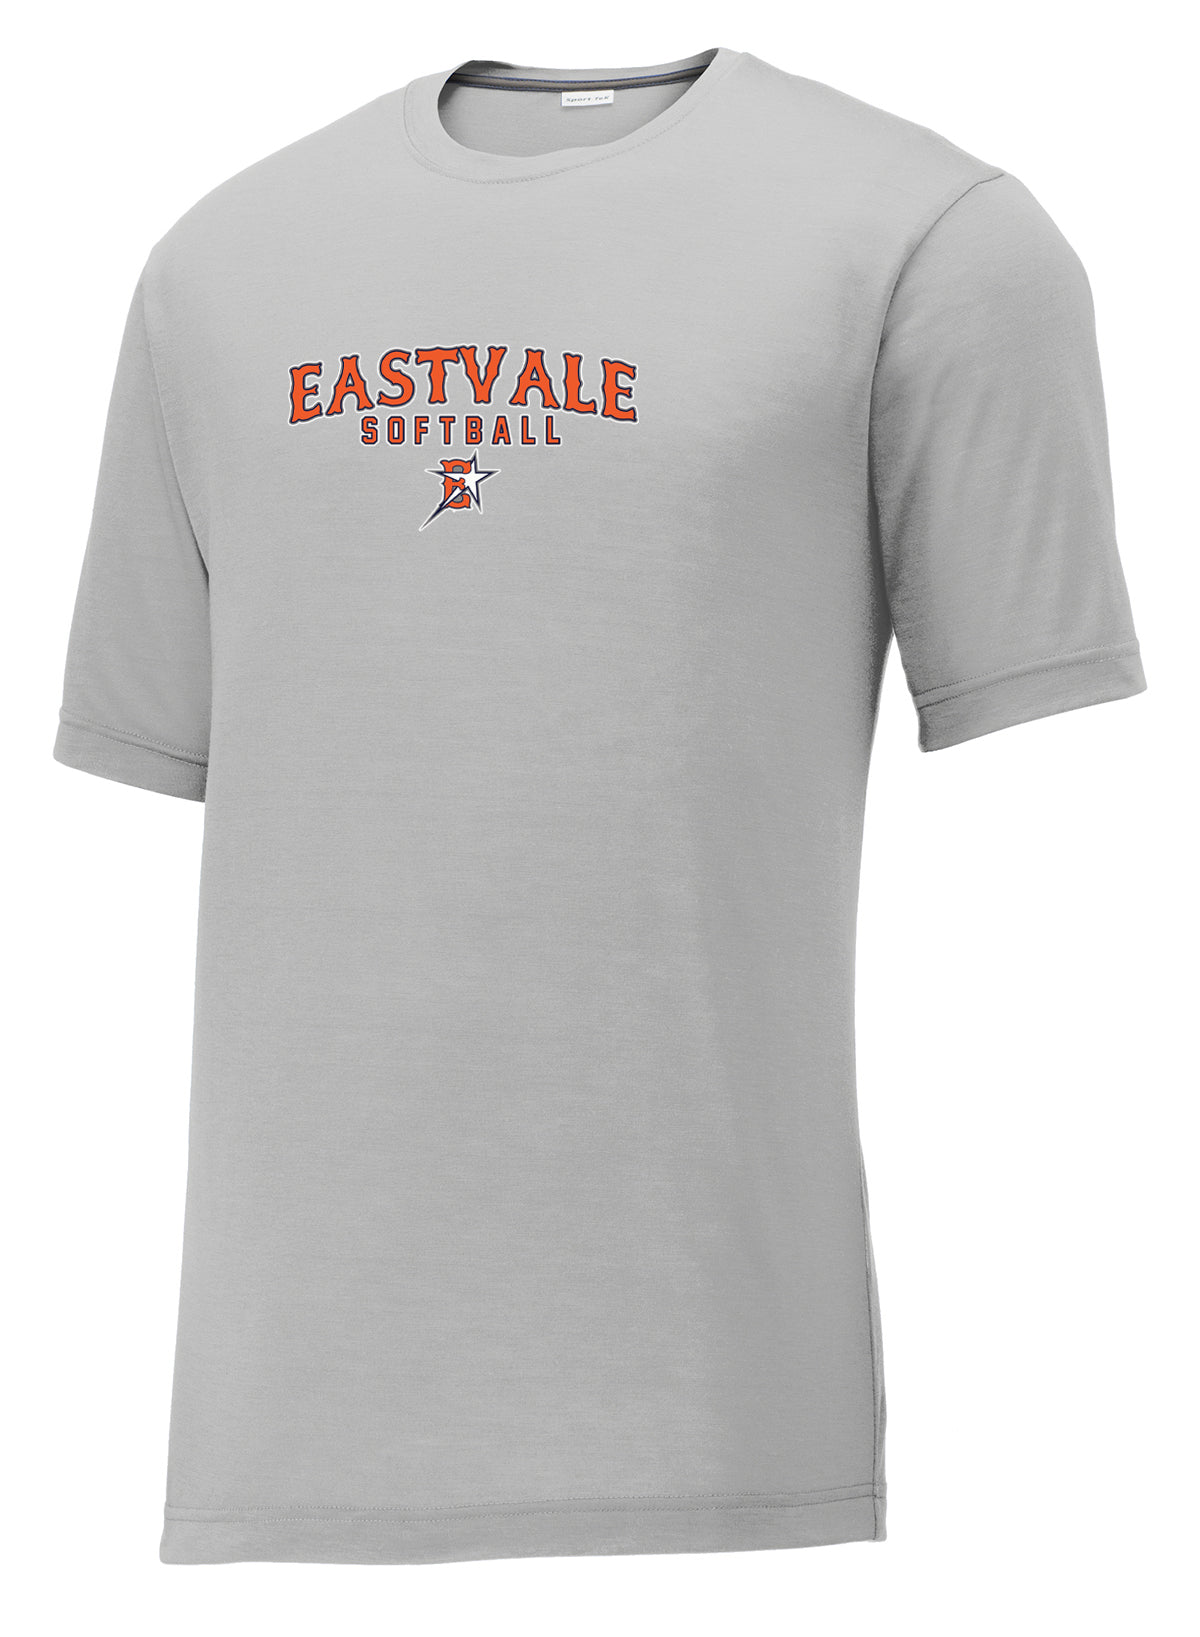 Eastvale Girl's Softball CottonTouch Performance T-Shirt